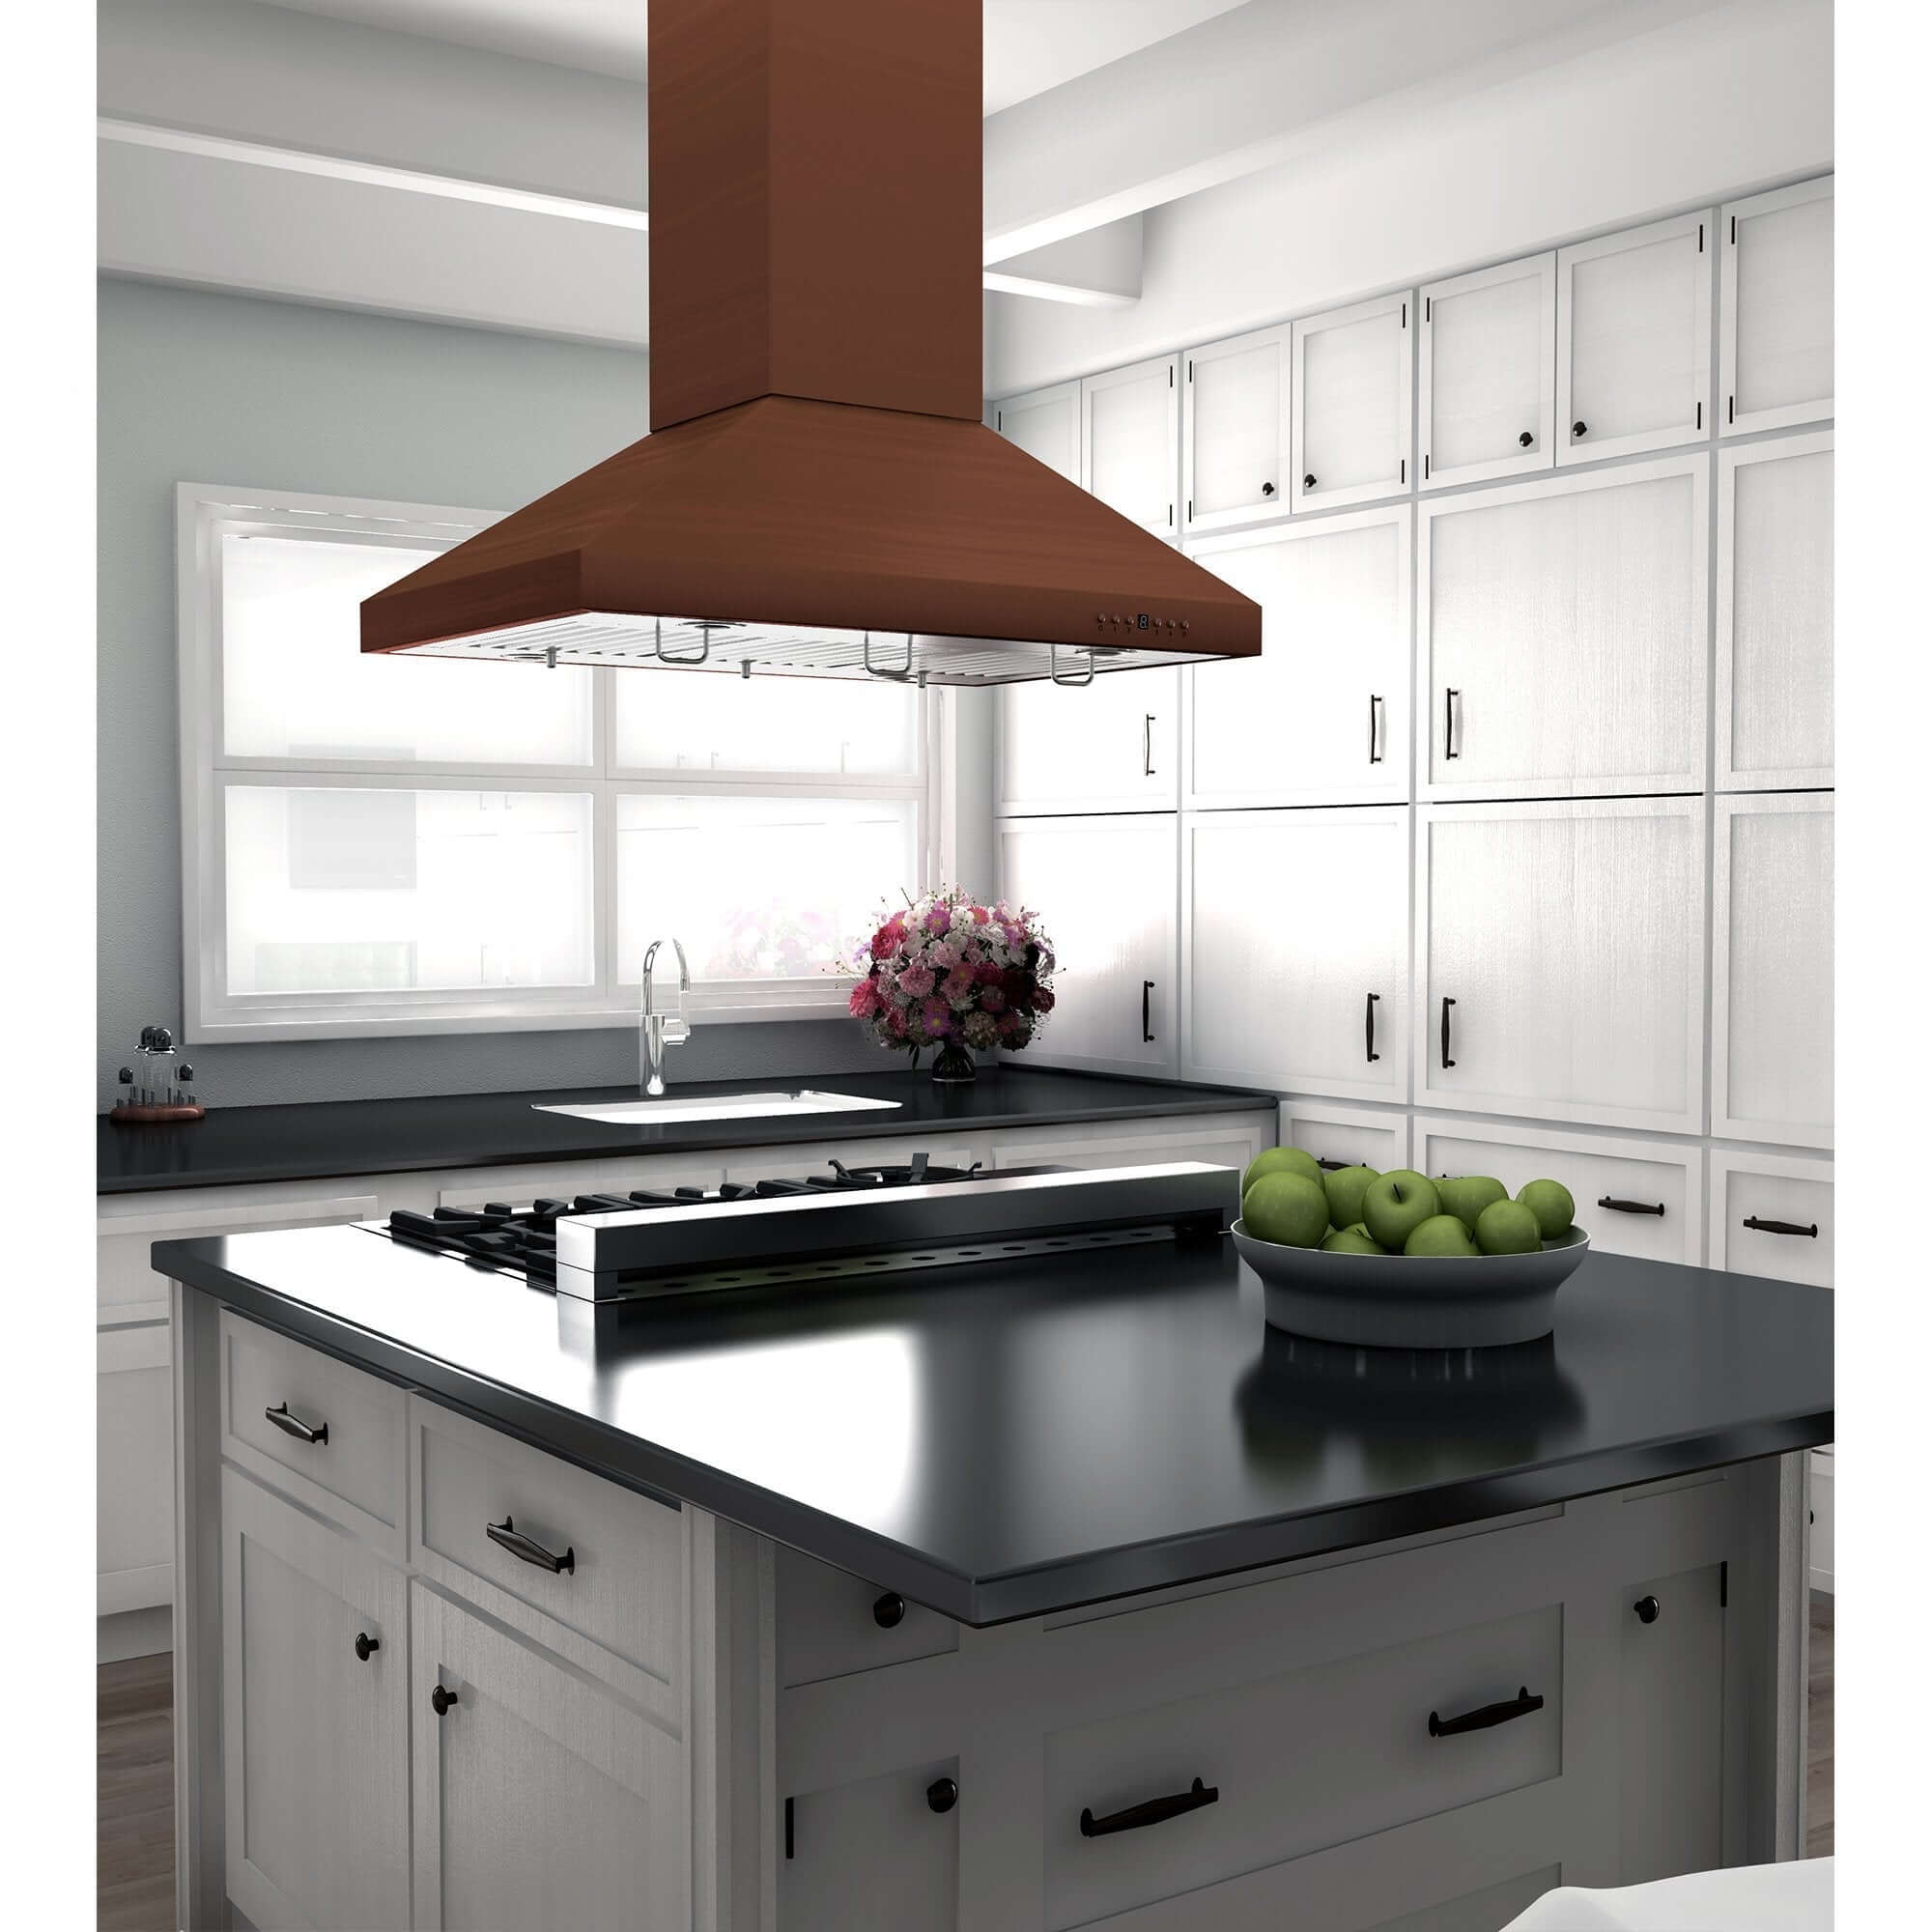 ZLINE 36 in. Designer Series Copper Island Mount Range Hood (8KL3iC-36) rendering in a modern kitchen opposite angle.